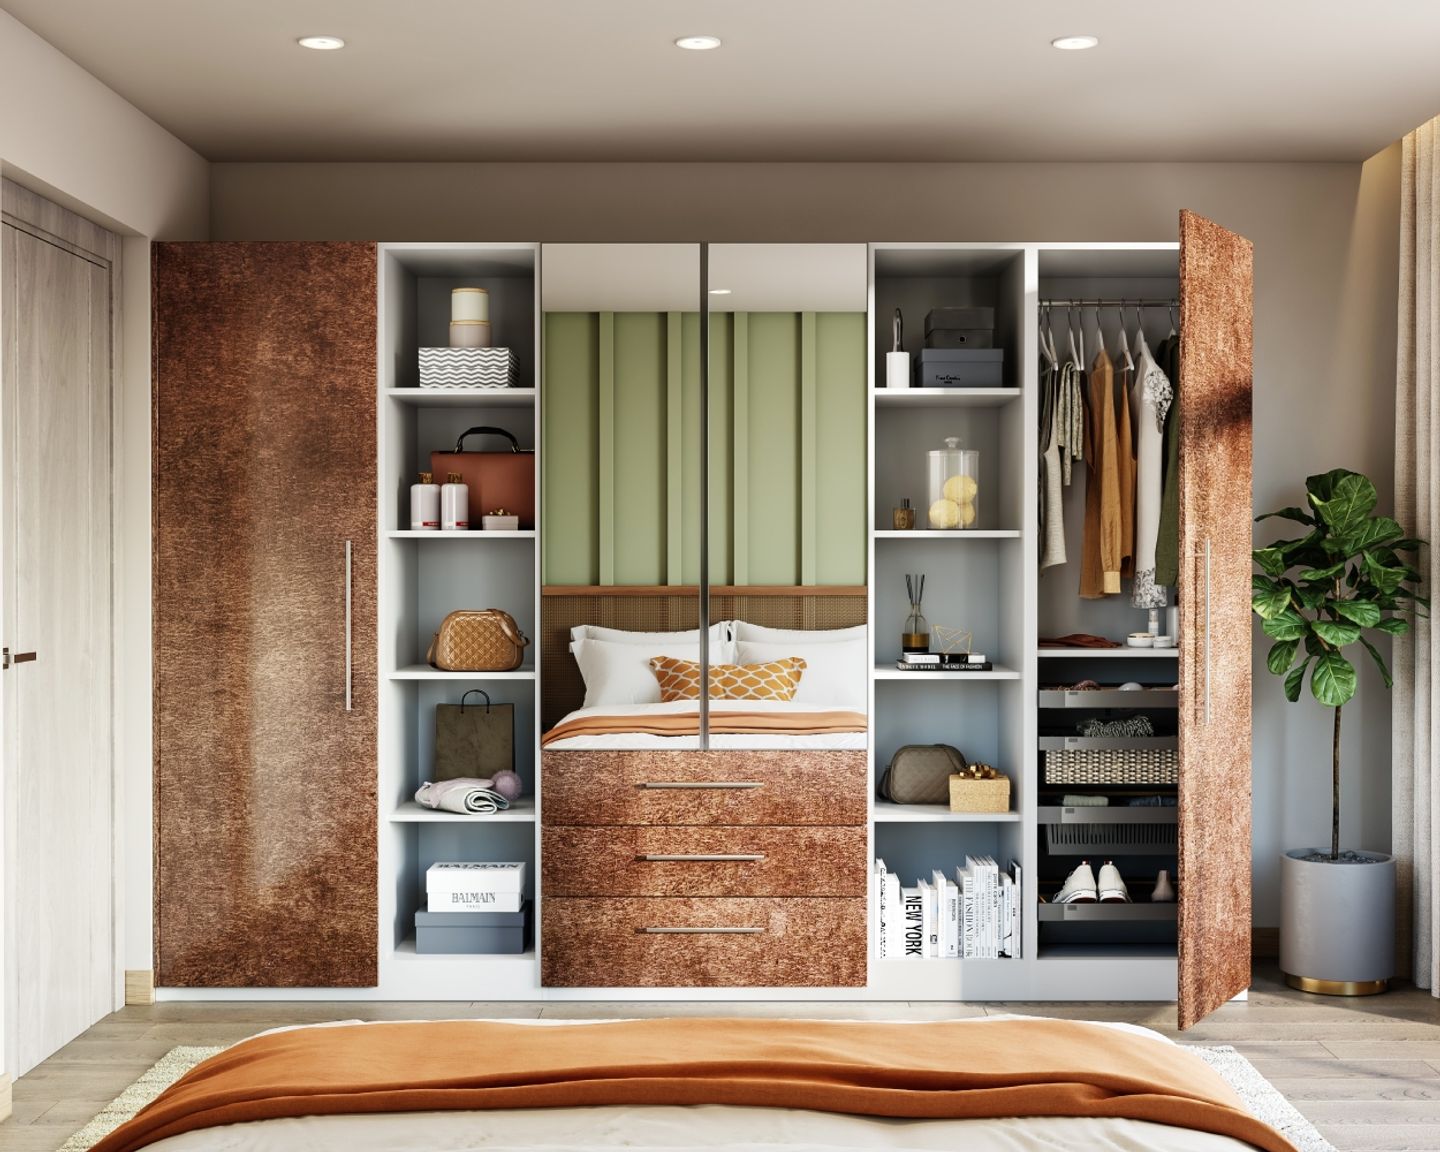 4-Door Swing Wardrobe Design With Textured Brown Shutters, Mirror And Ample Storage - Livspace